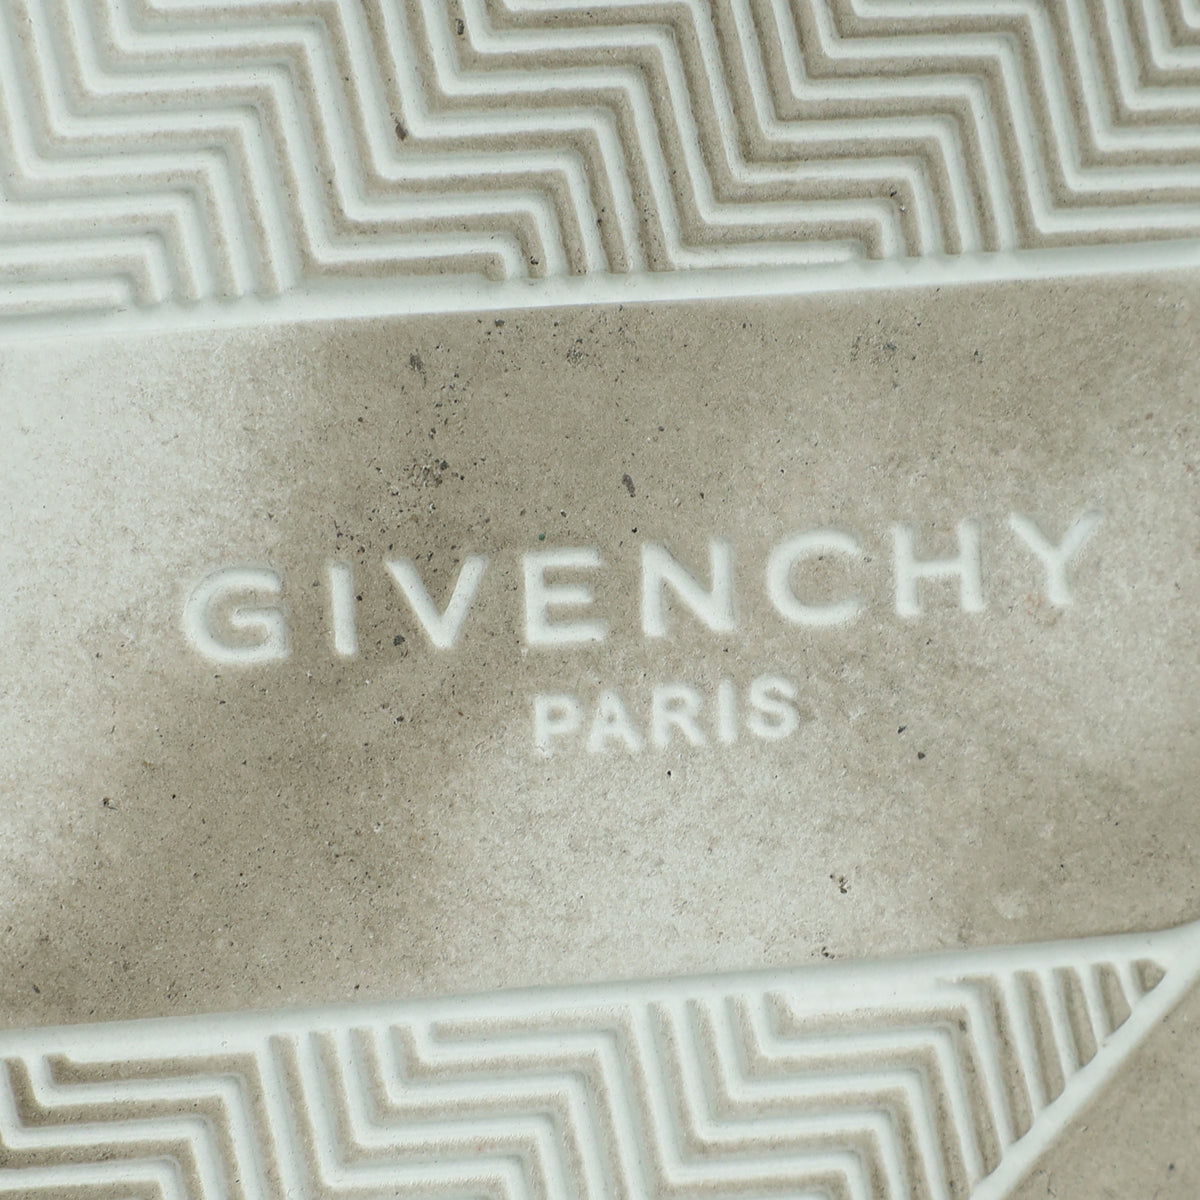 Givenchy Bicolor Urban Street Logo Slip-on Sneakers 43